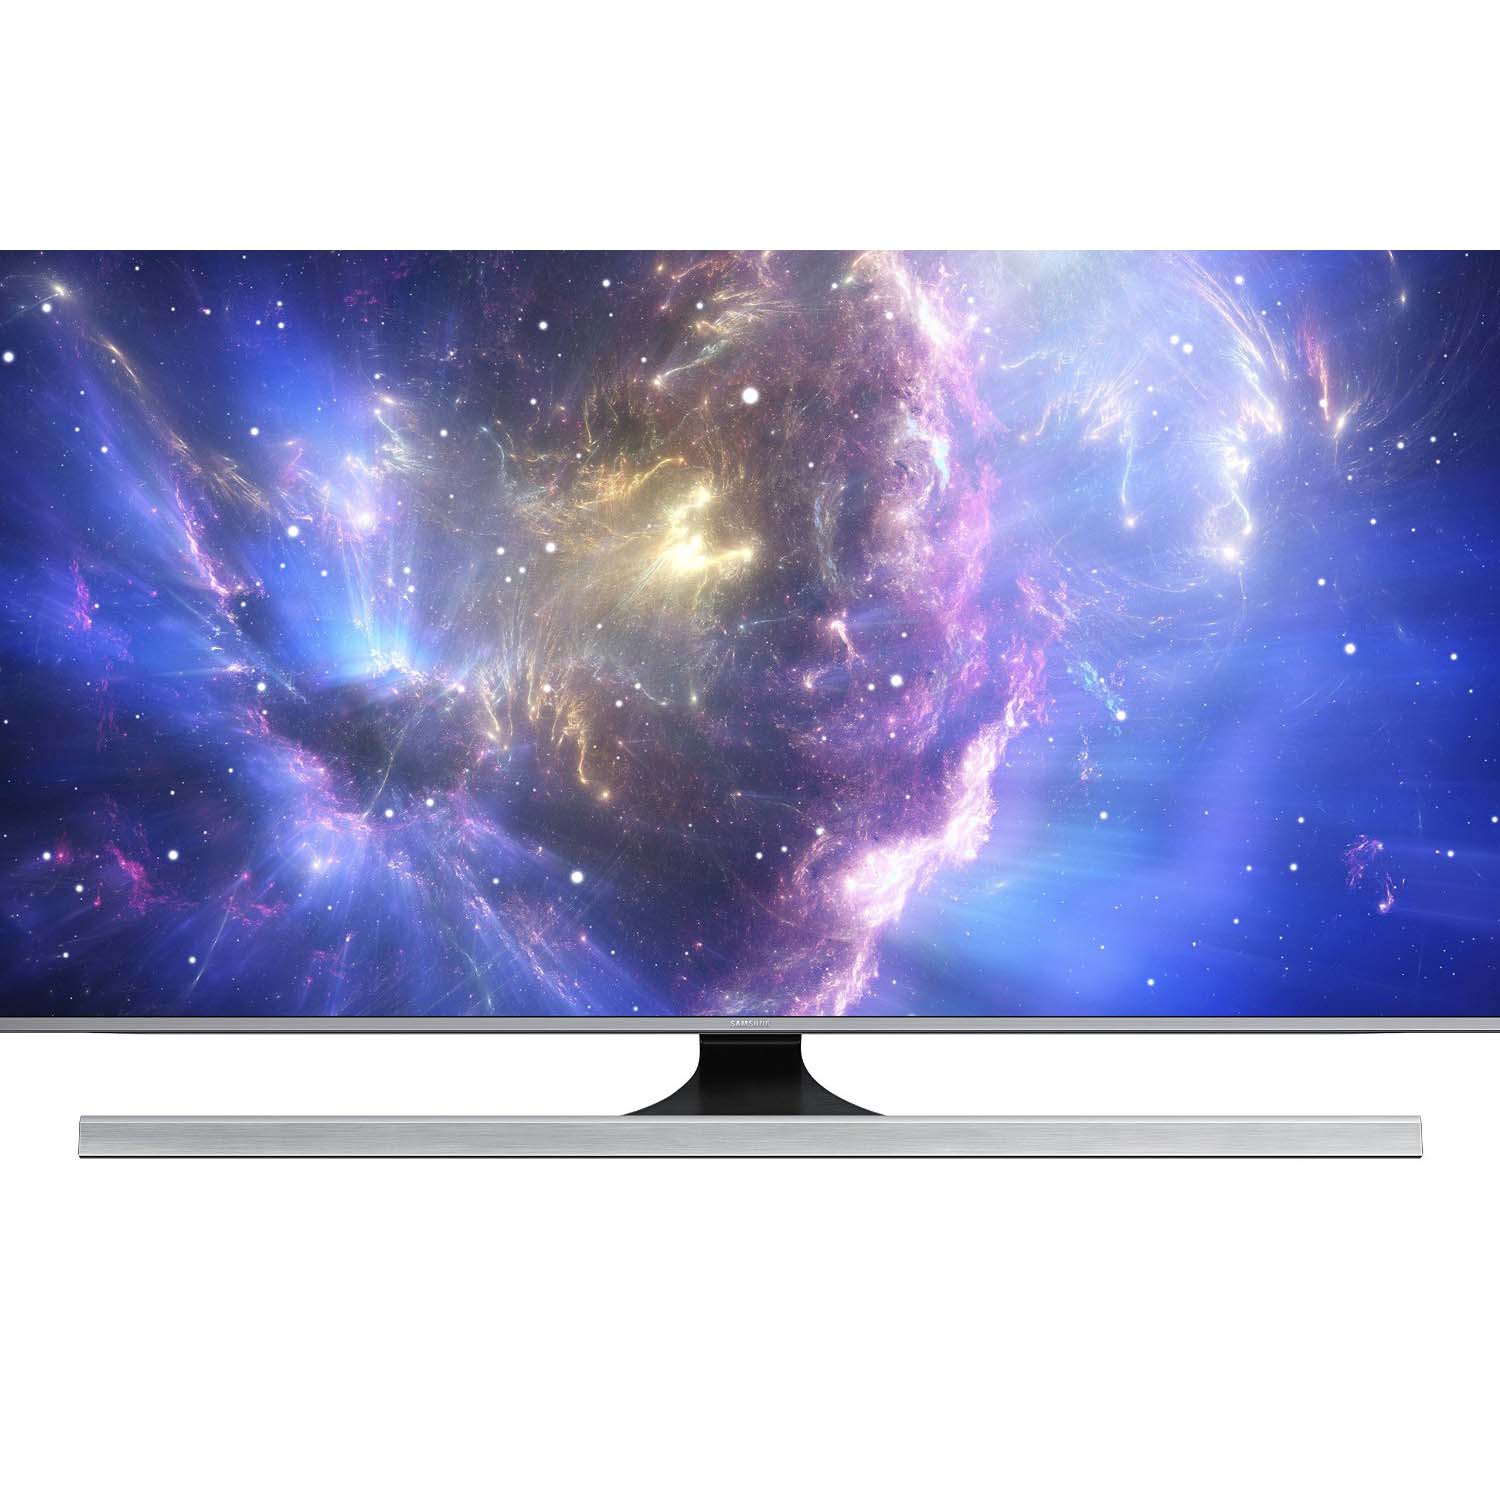 Samsung UN65JS8500 65-Inch 4K Ultra HD Smart LED TV (2015 Model) *관부가세 별도*